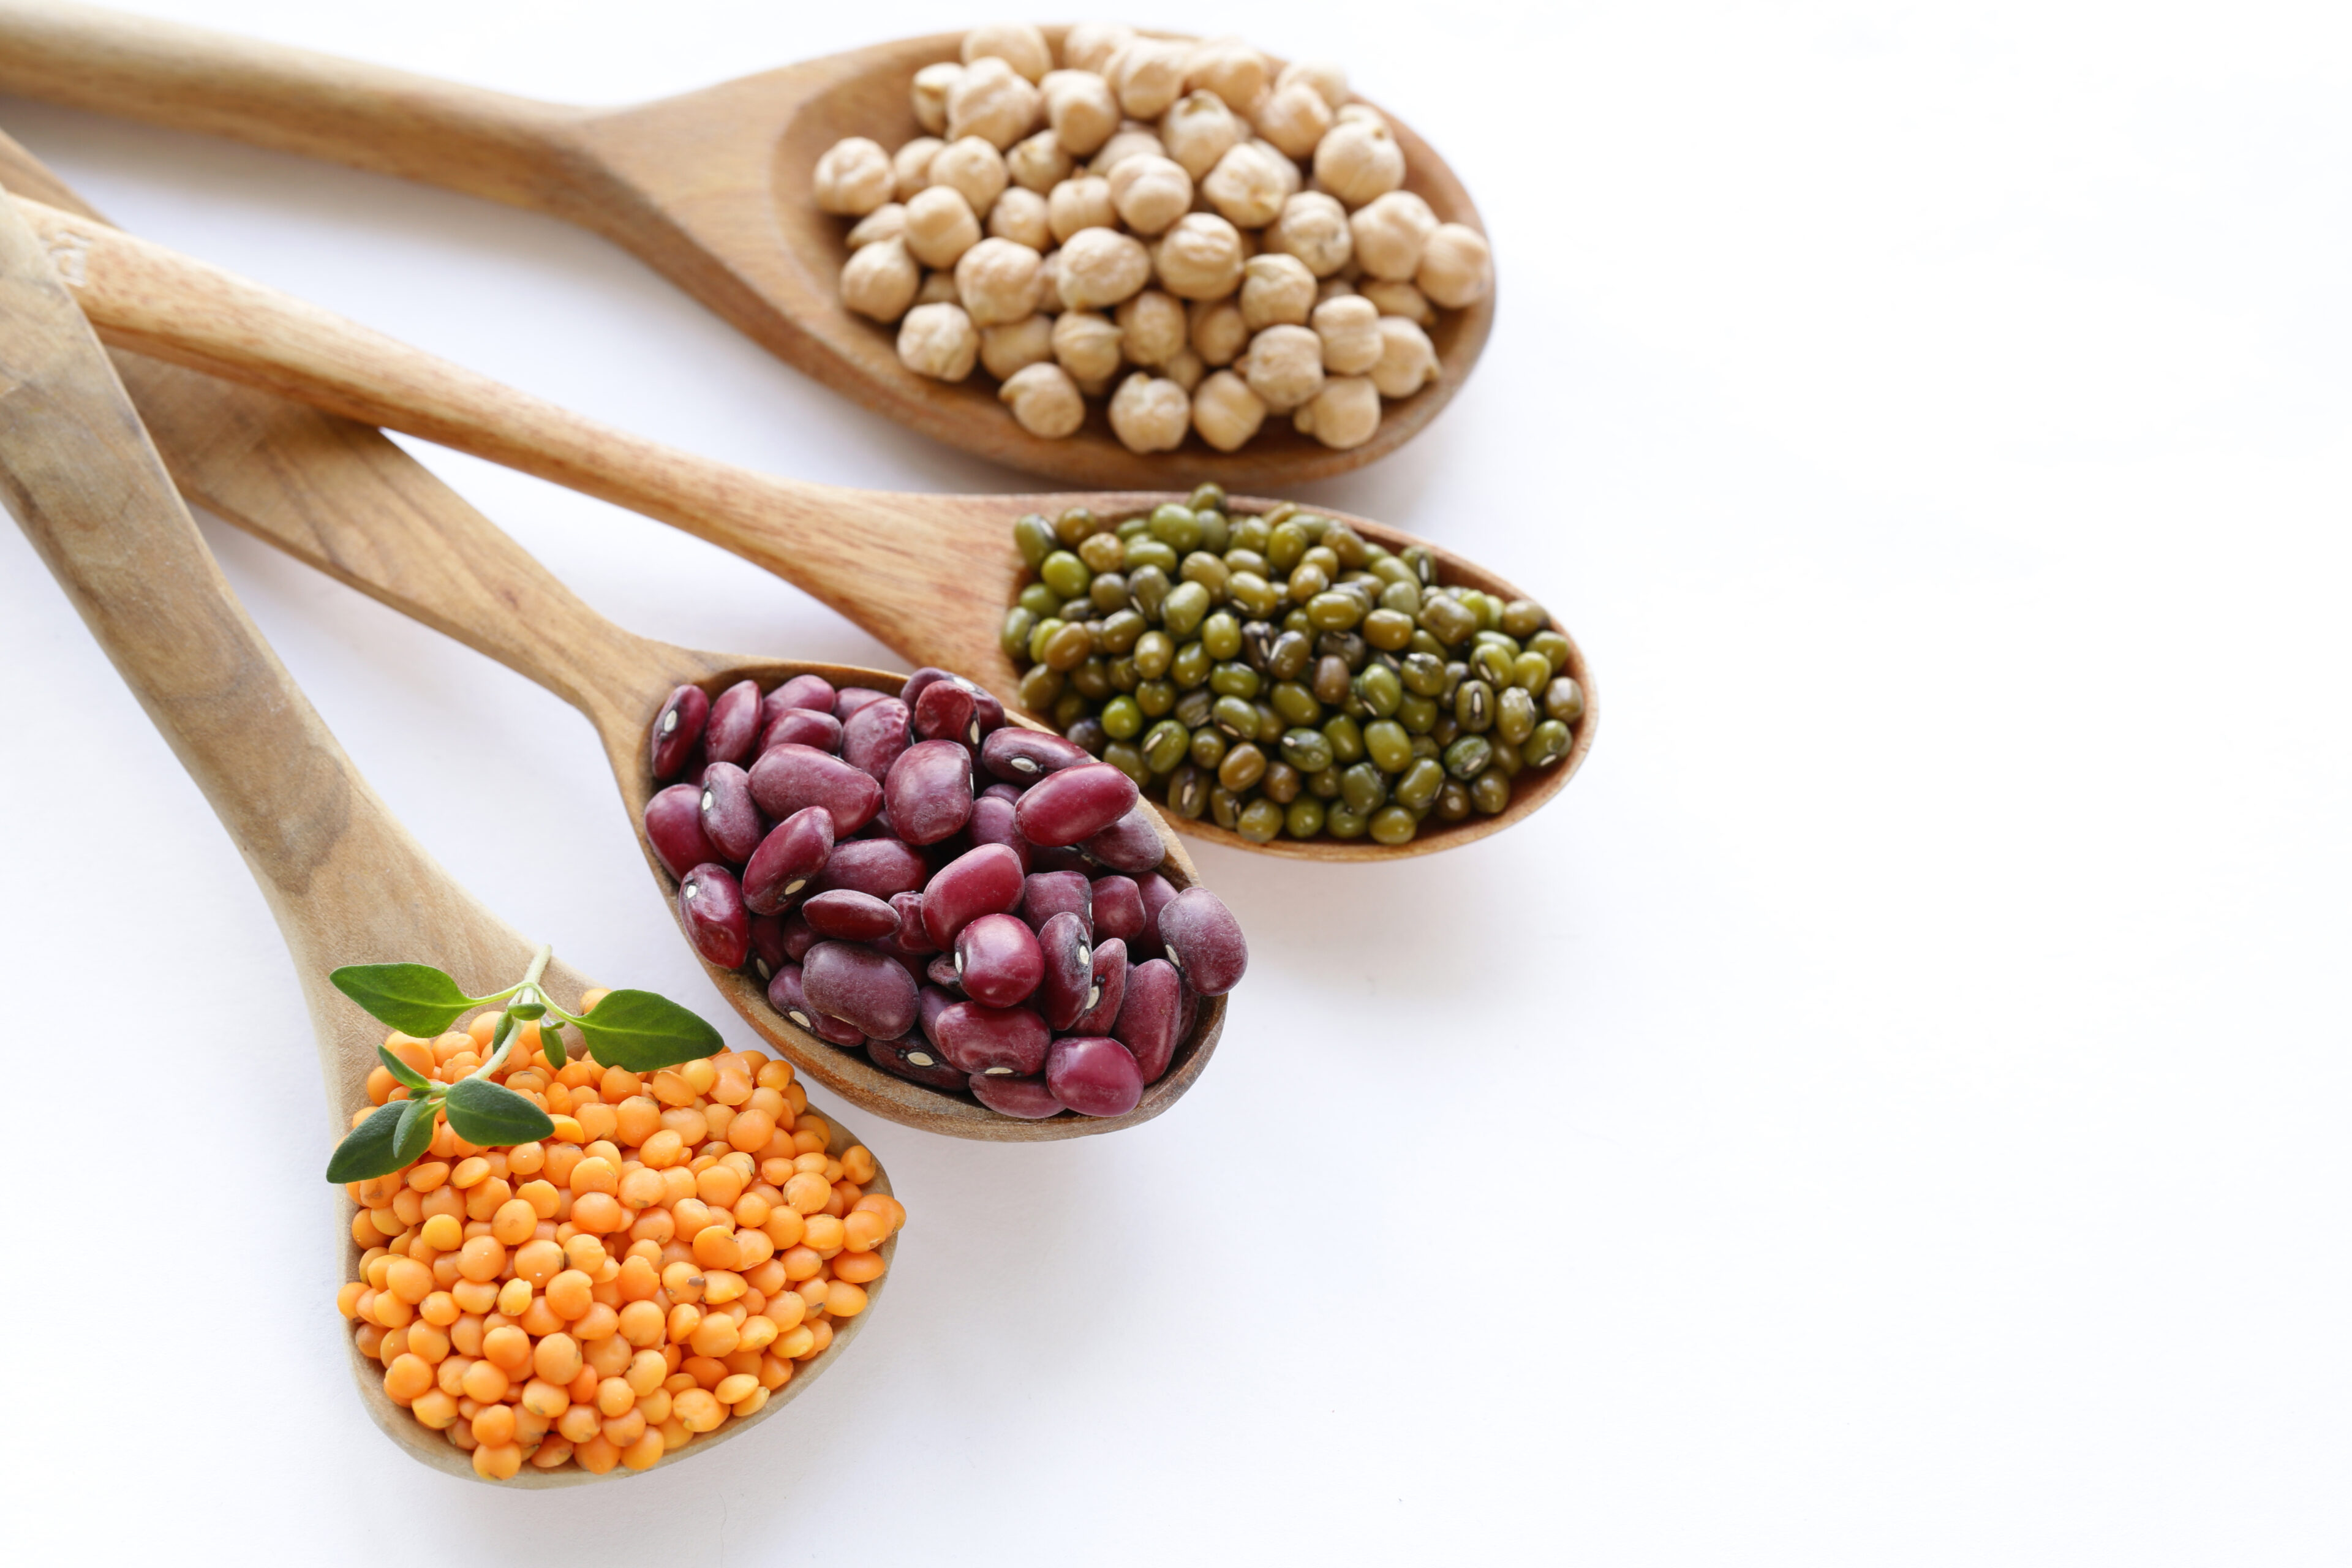 Various kinds of legumes - beans, lentils, chickpeas, mung beans